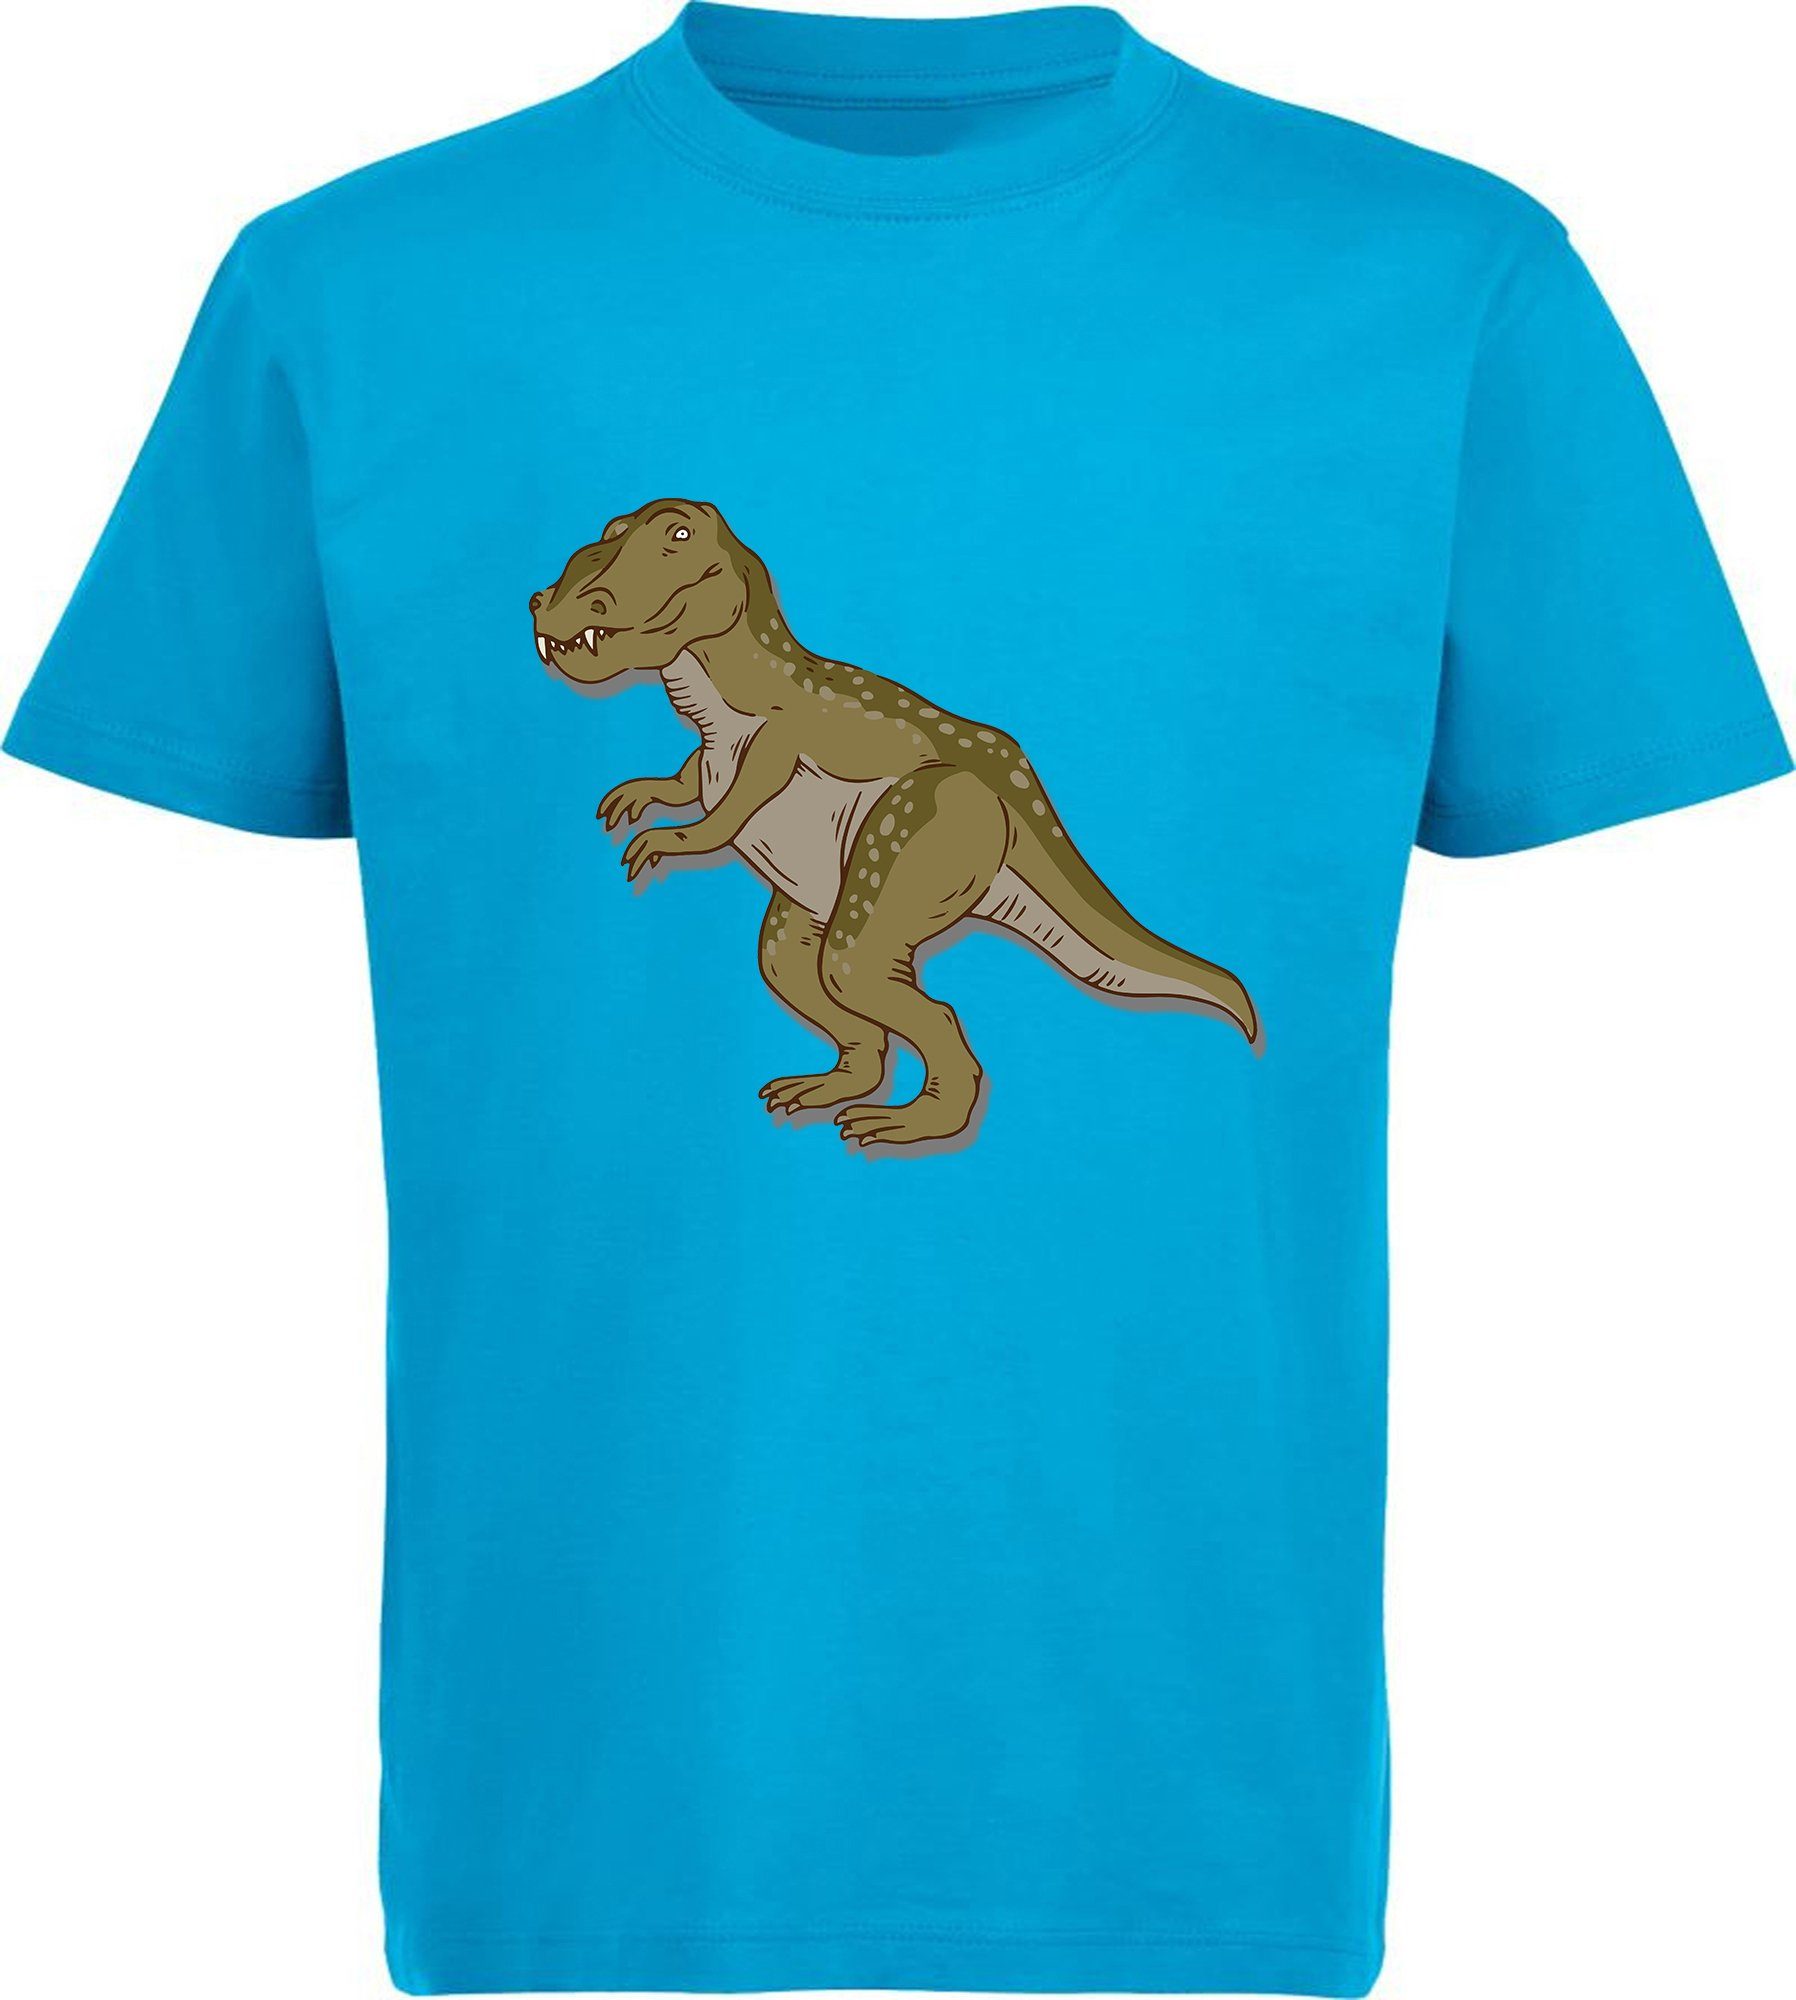 blau rot, mit Print-Shirt Baumwollshirt Dino, Tyrannosaurus Rex mit T-Shirt weiß, blau, schwarz, i69 aqua MyDesign24 Kinder bedrucktes